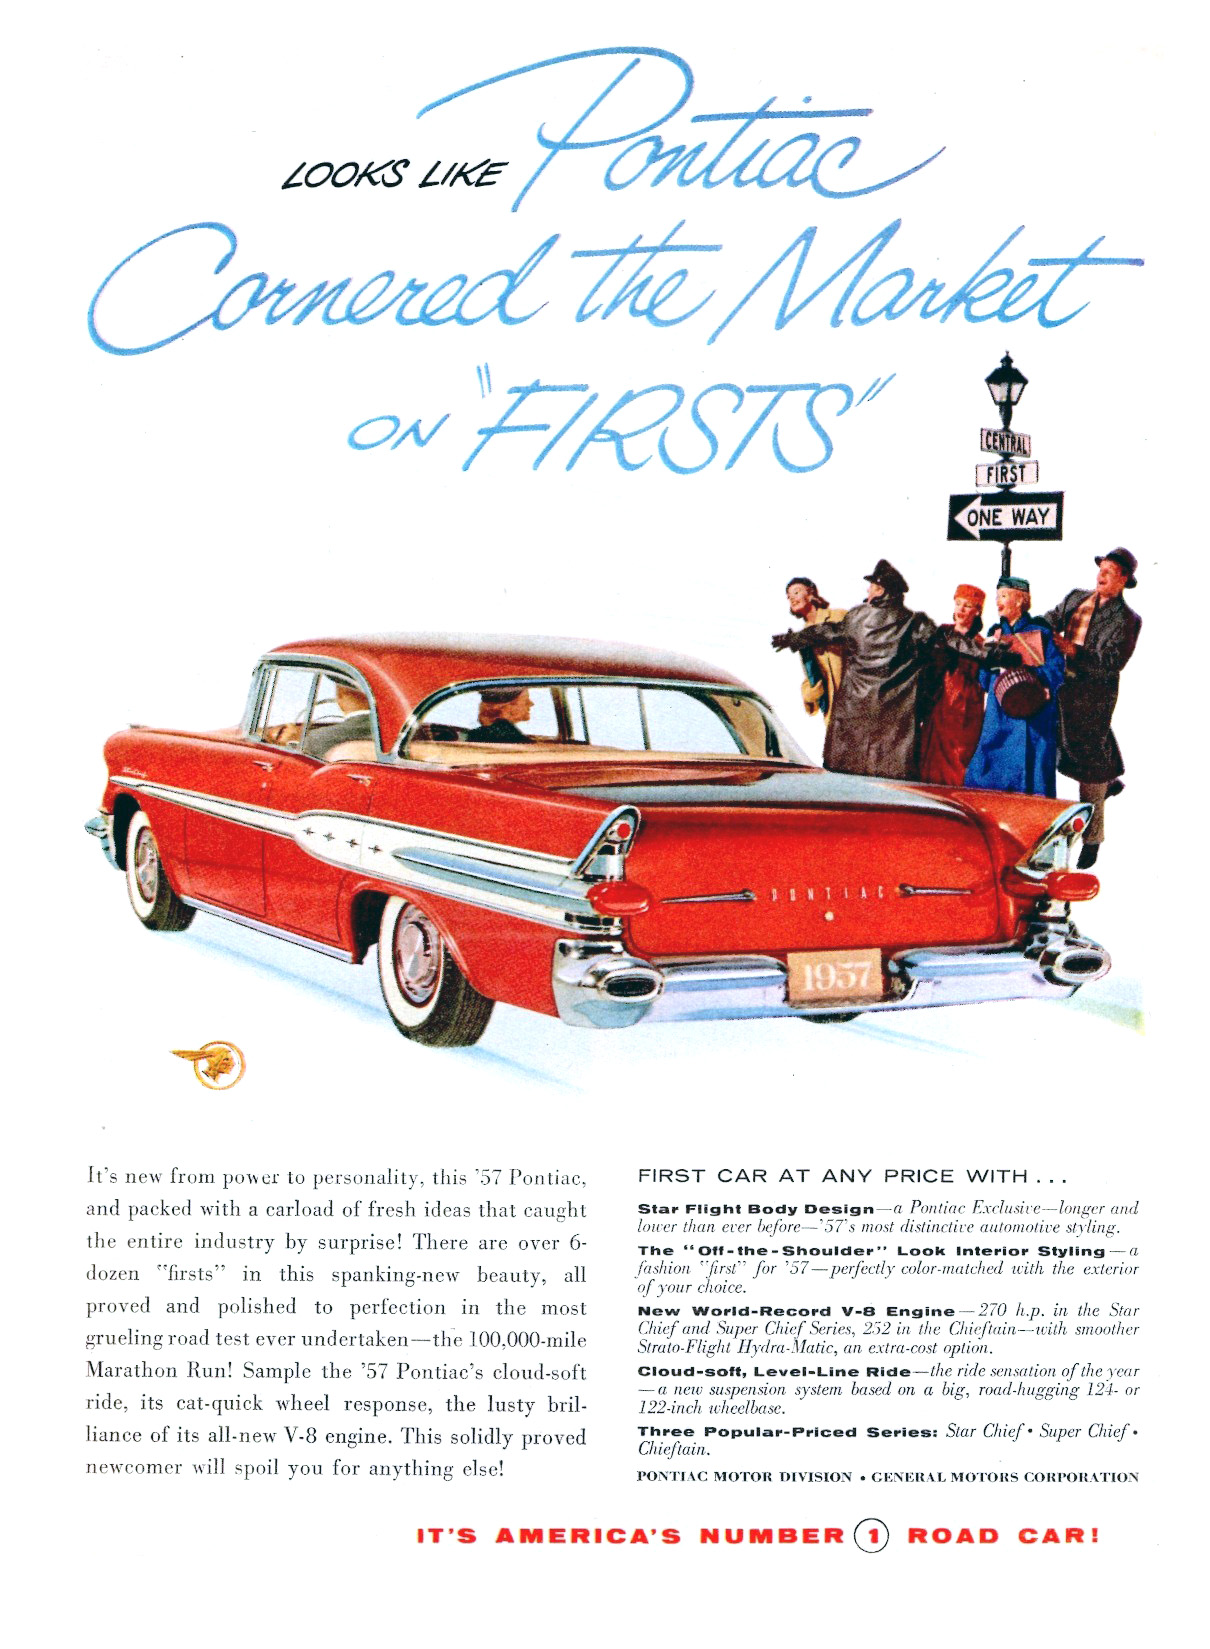 Pontiac Ad (December, 1956) - Star Chief Catalina 4-Door - Looks like Pontiac Cornered the Market of “Firsts”